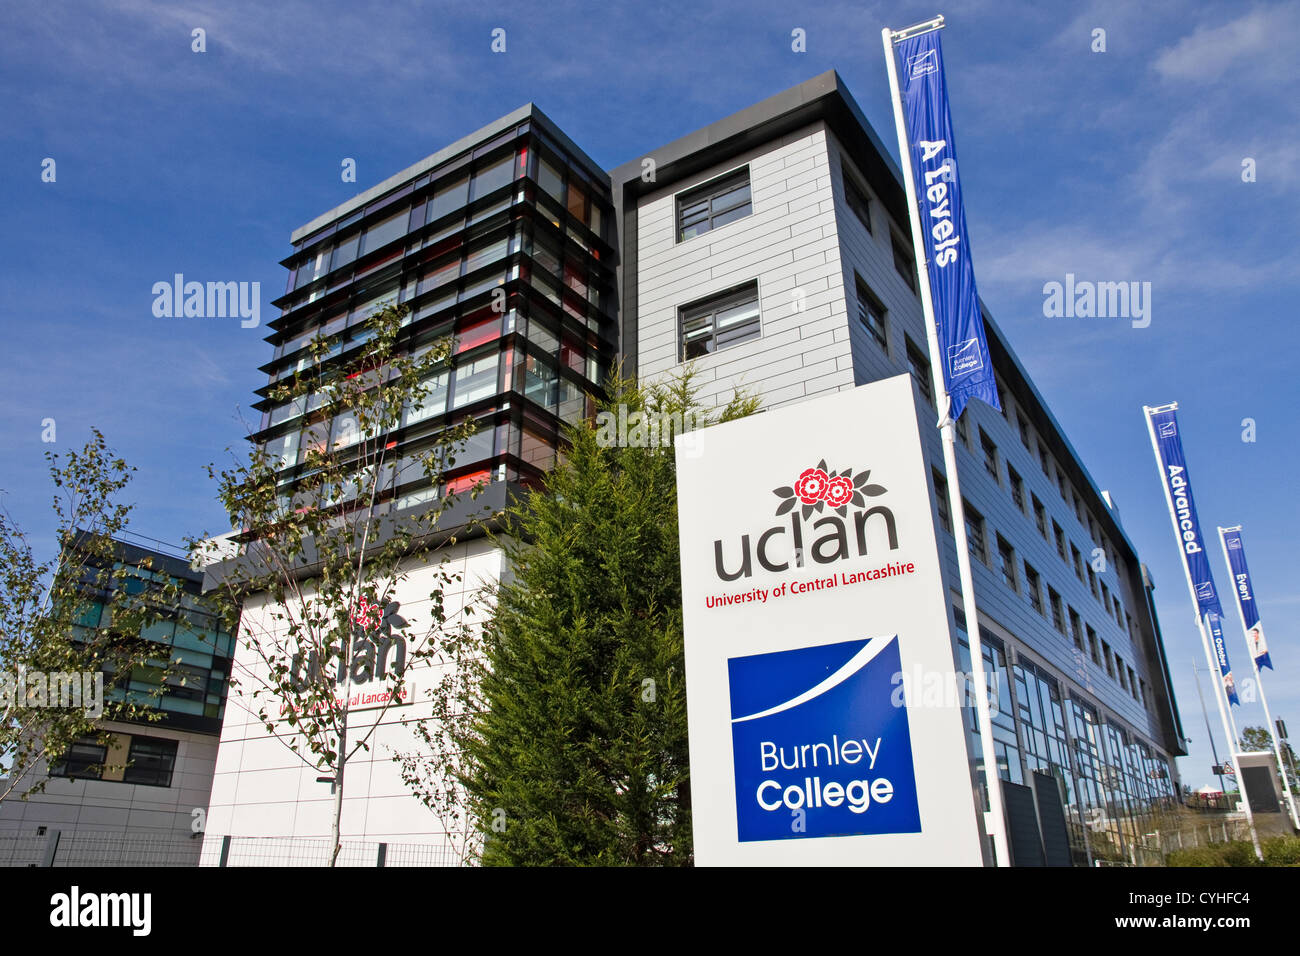 University of Central Lancashire (UCLan), Burnley College campus, Burnley, Lancashire, England, UK Stock Photo